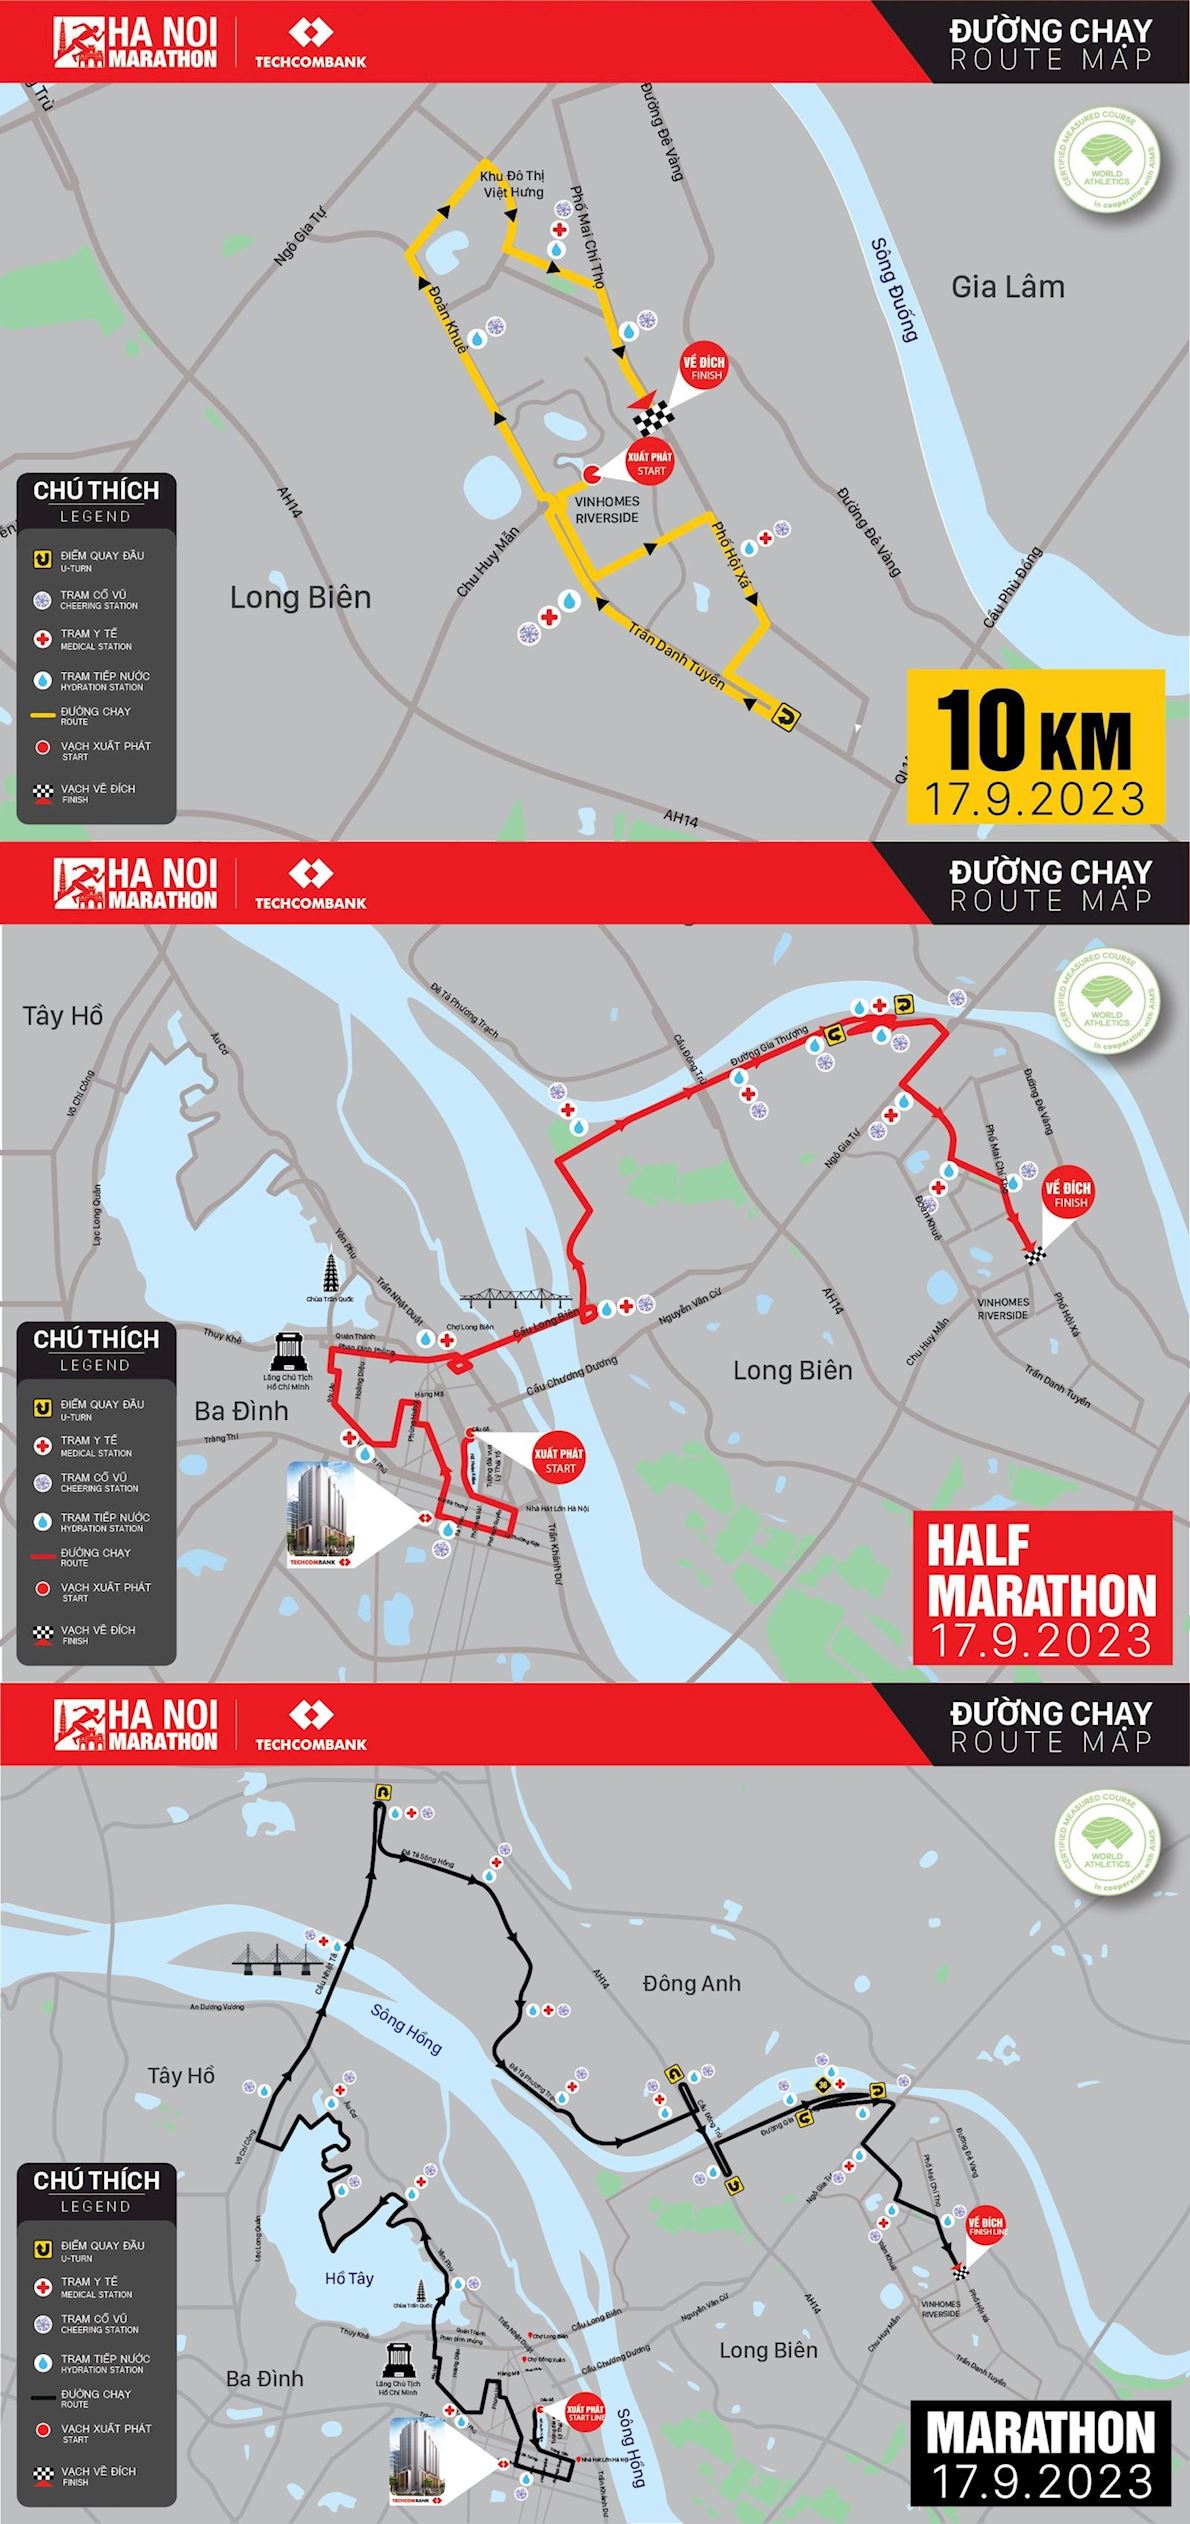 TECHCOMBANK Ha Noi Marathon Route Map